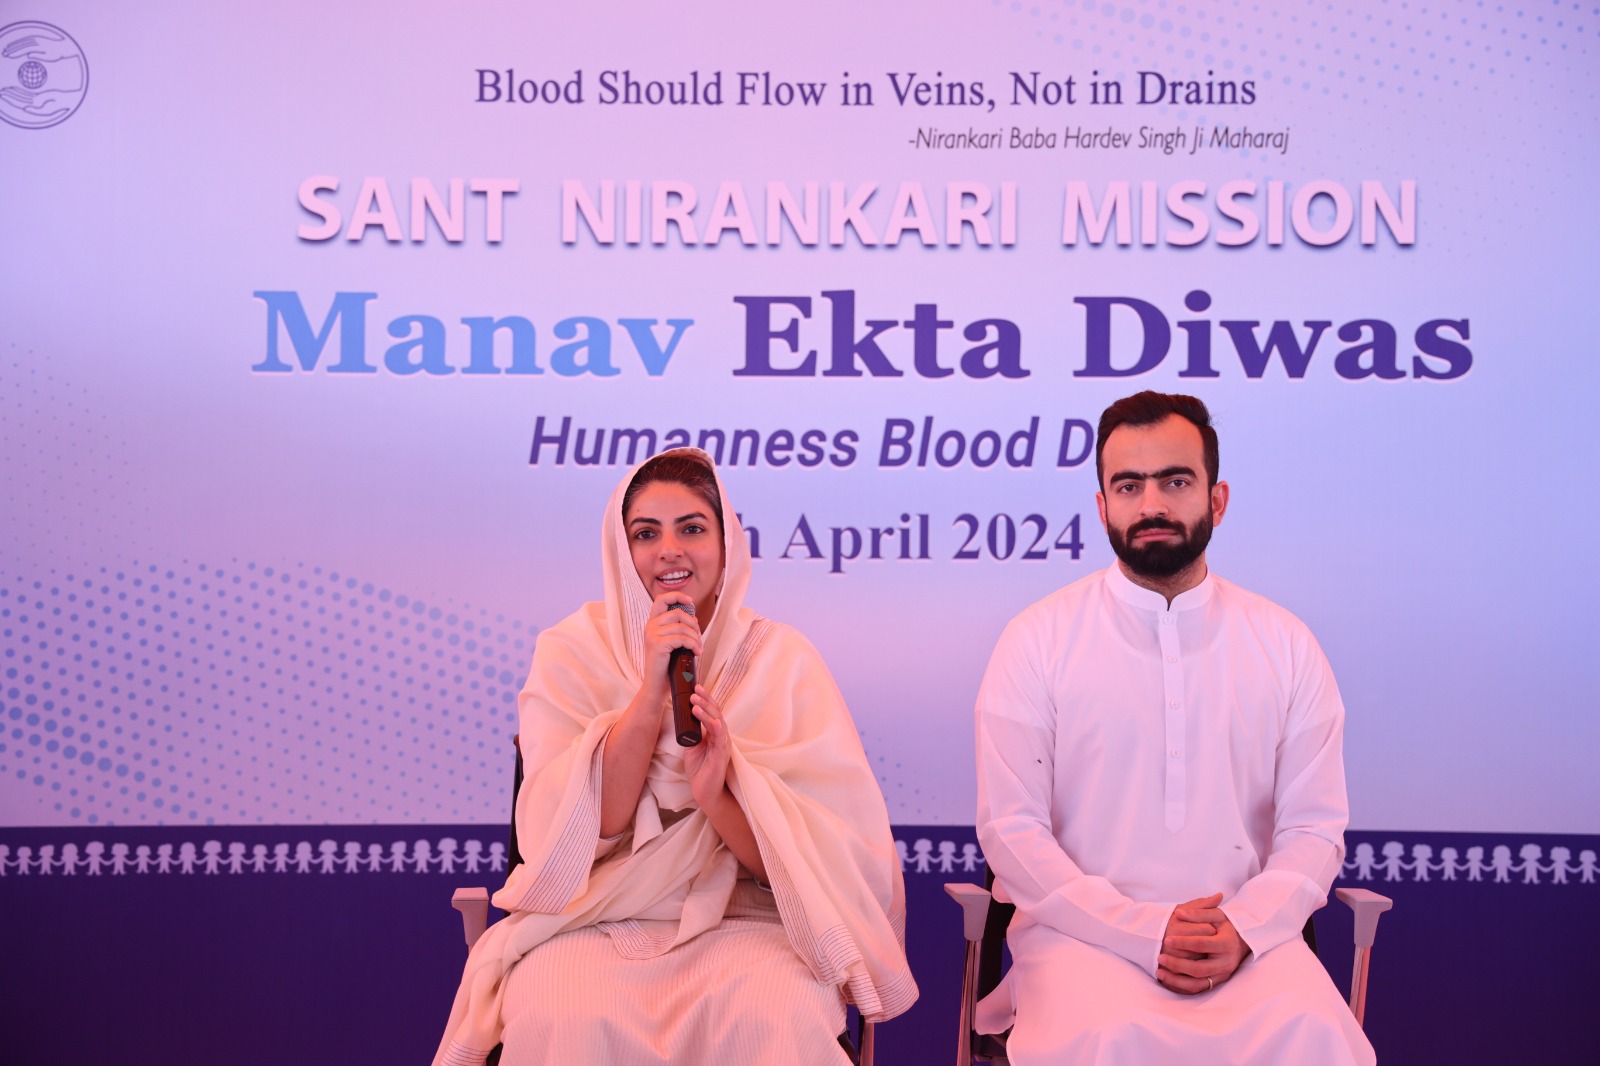 Sant Nirankari Mission: Man's life should be dedicated to charity - Satguru Mata Sudiksha Ji Maharaj